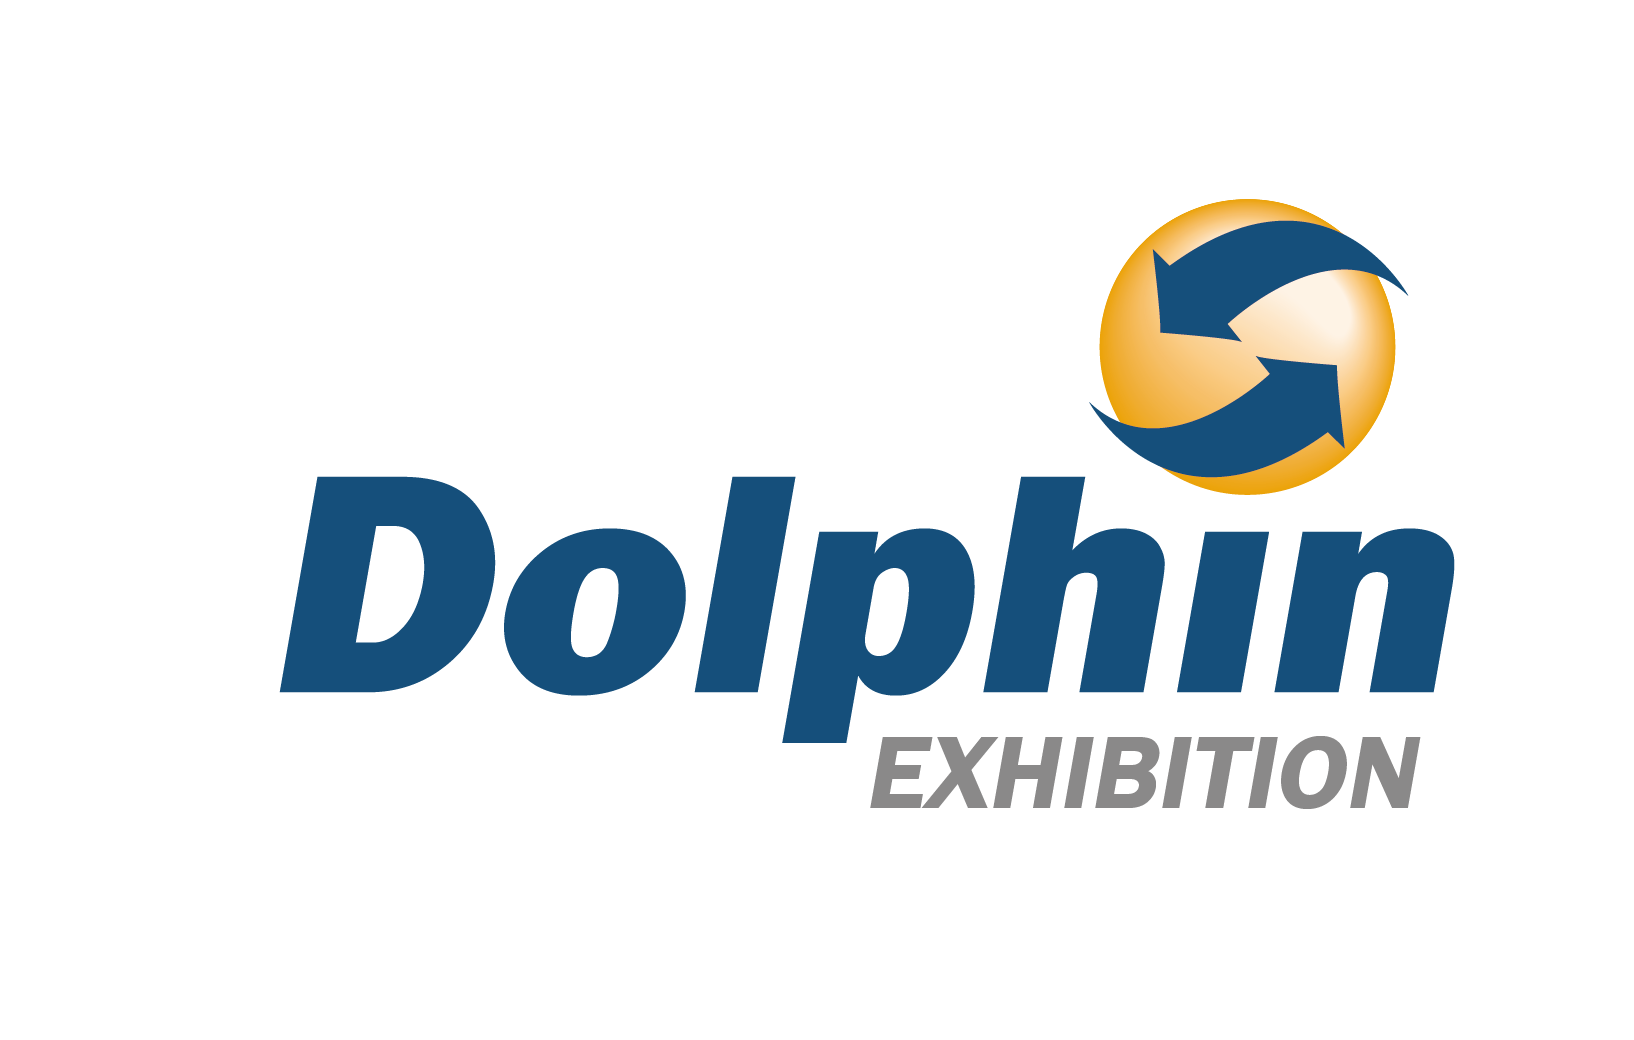 Dophin's logo